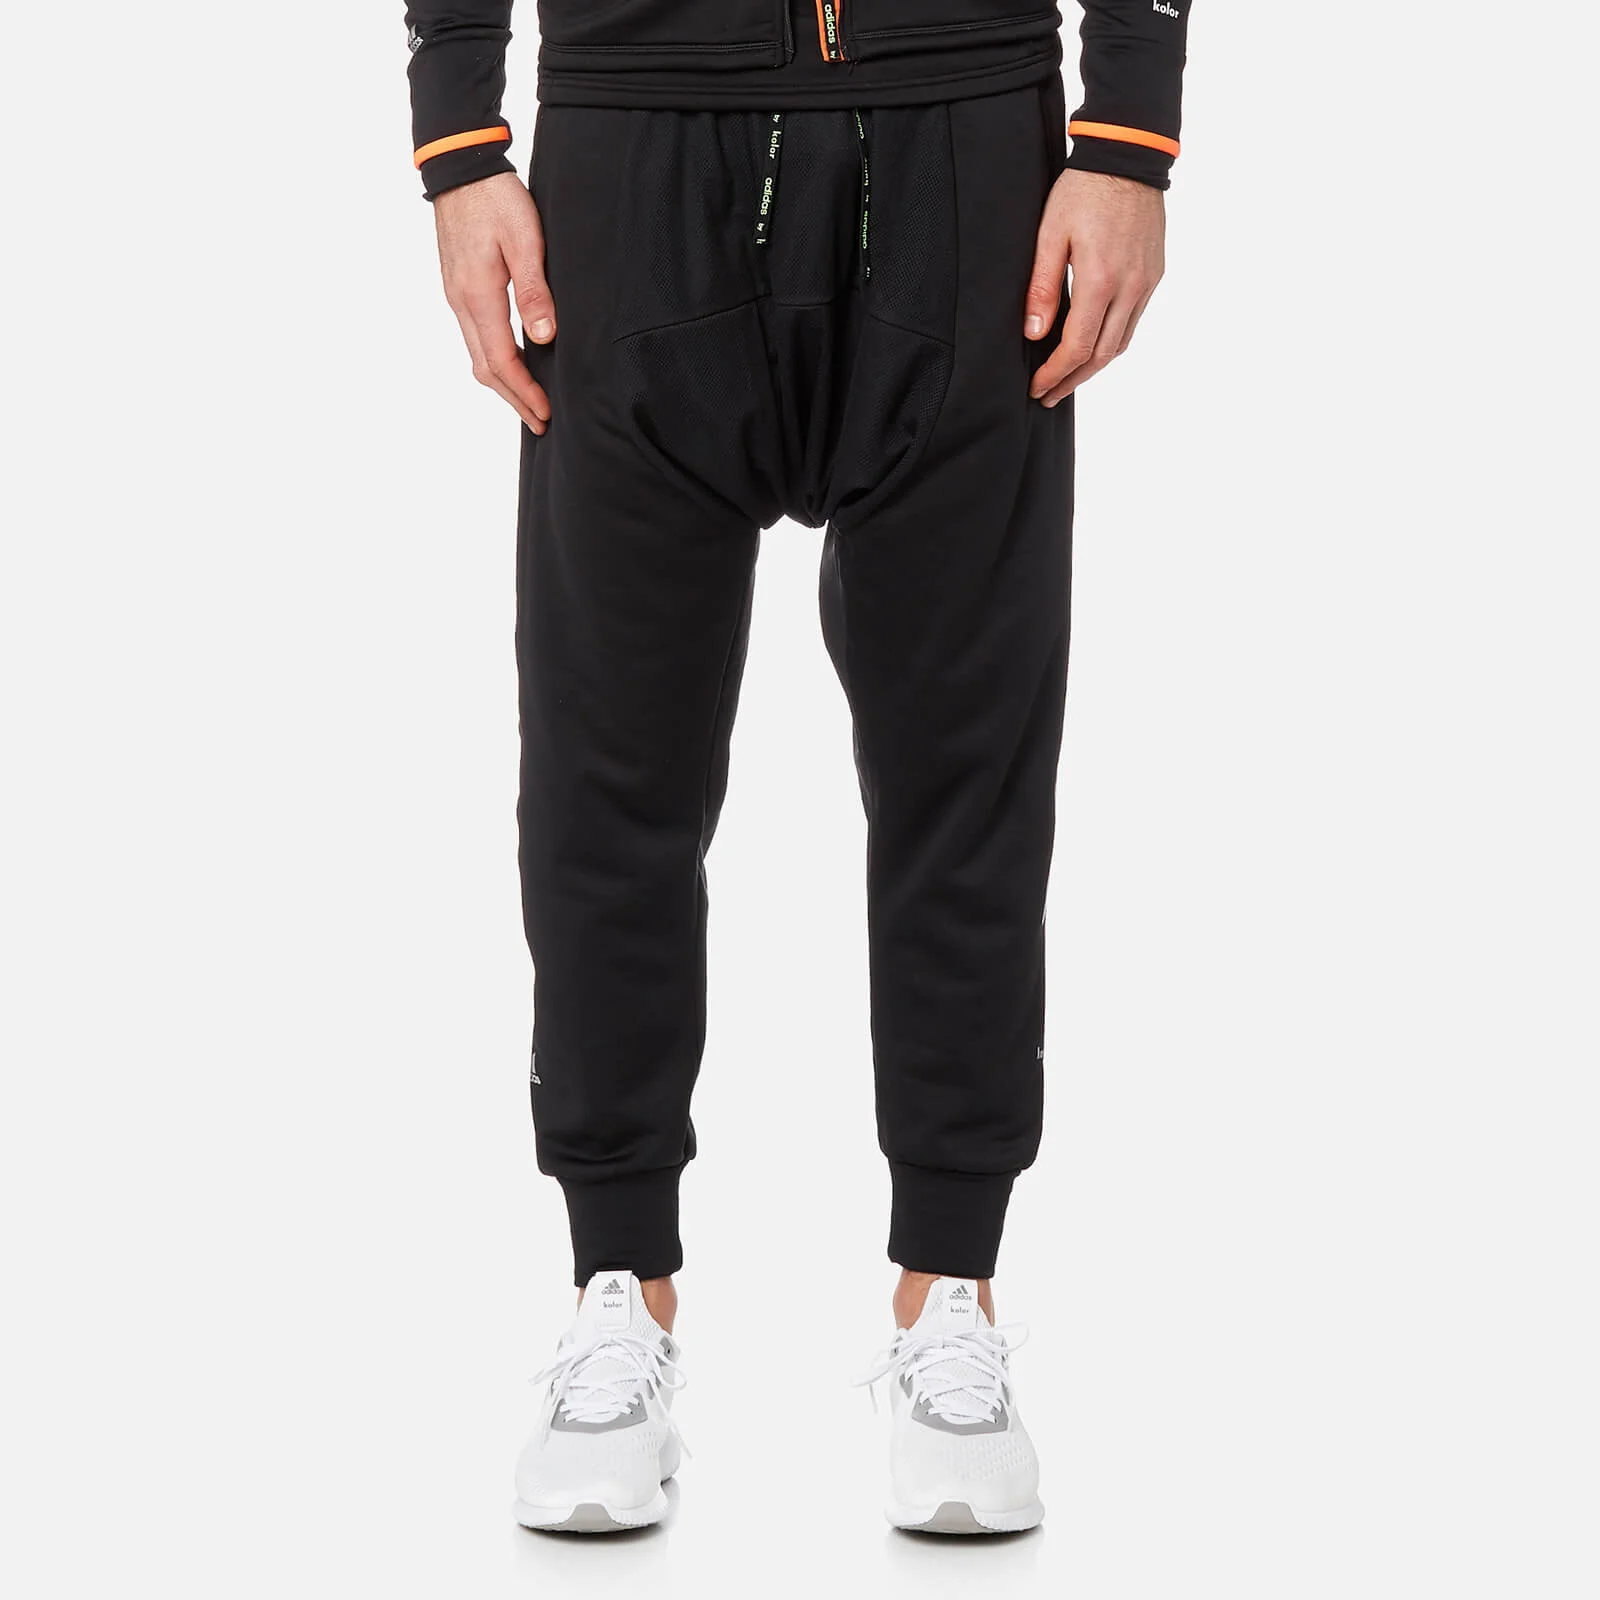 adidas by kolor Men's Hybrid Pants - Black Image 1